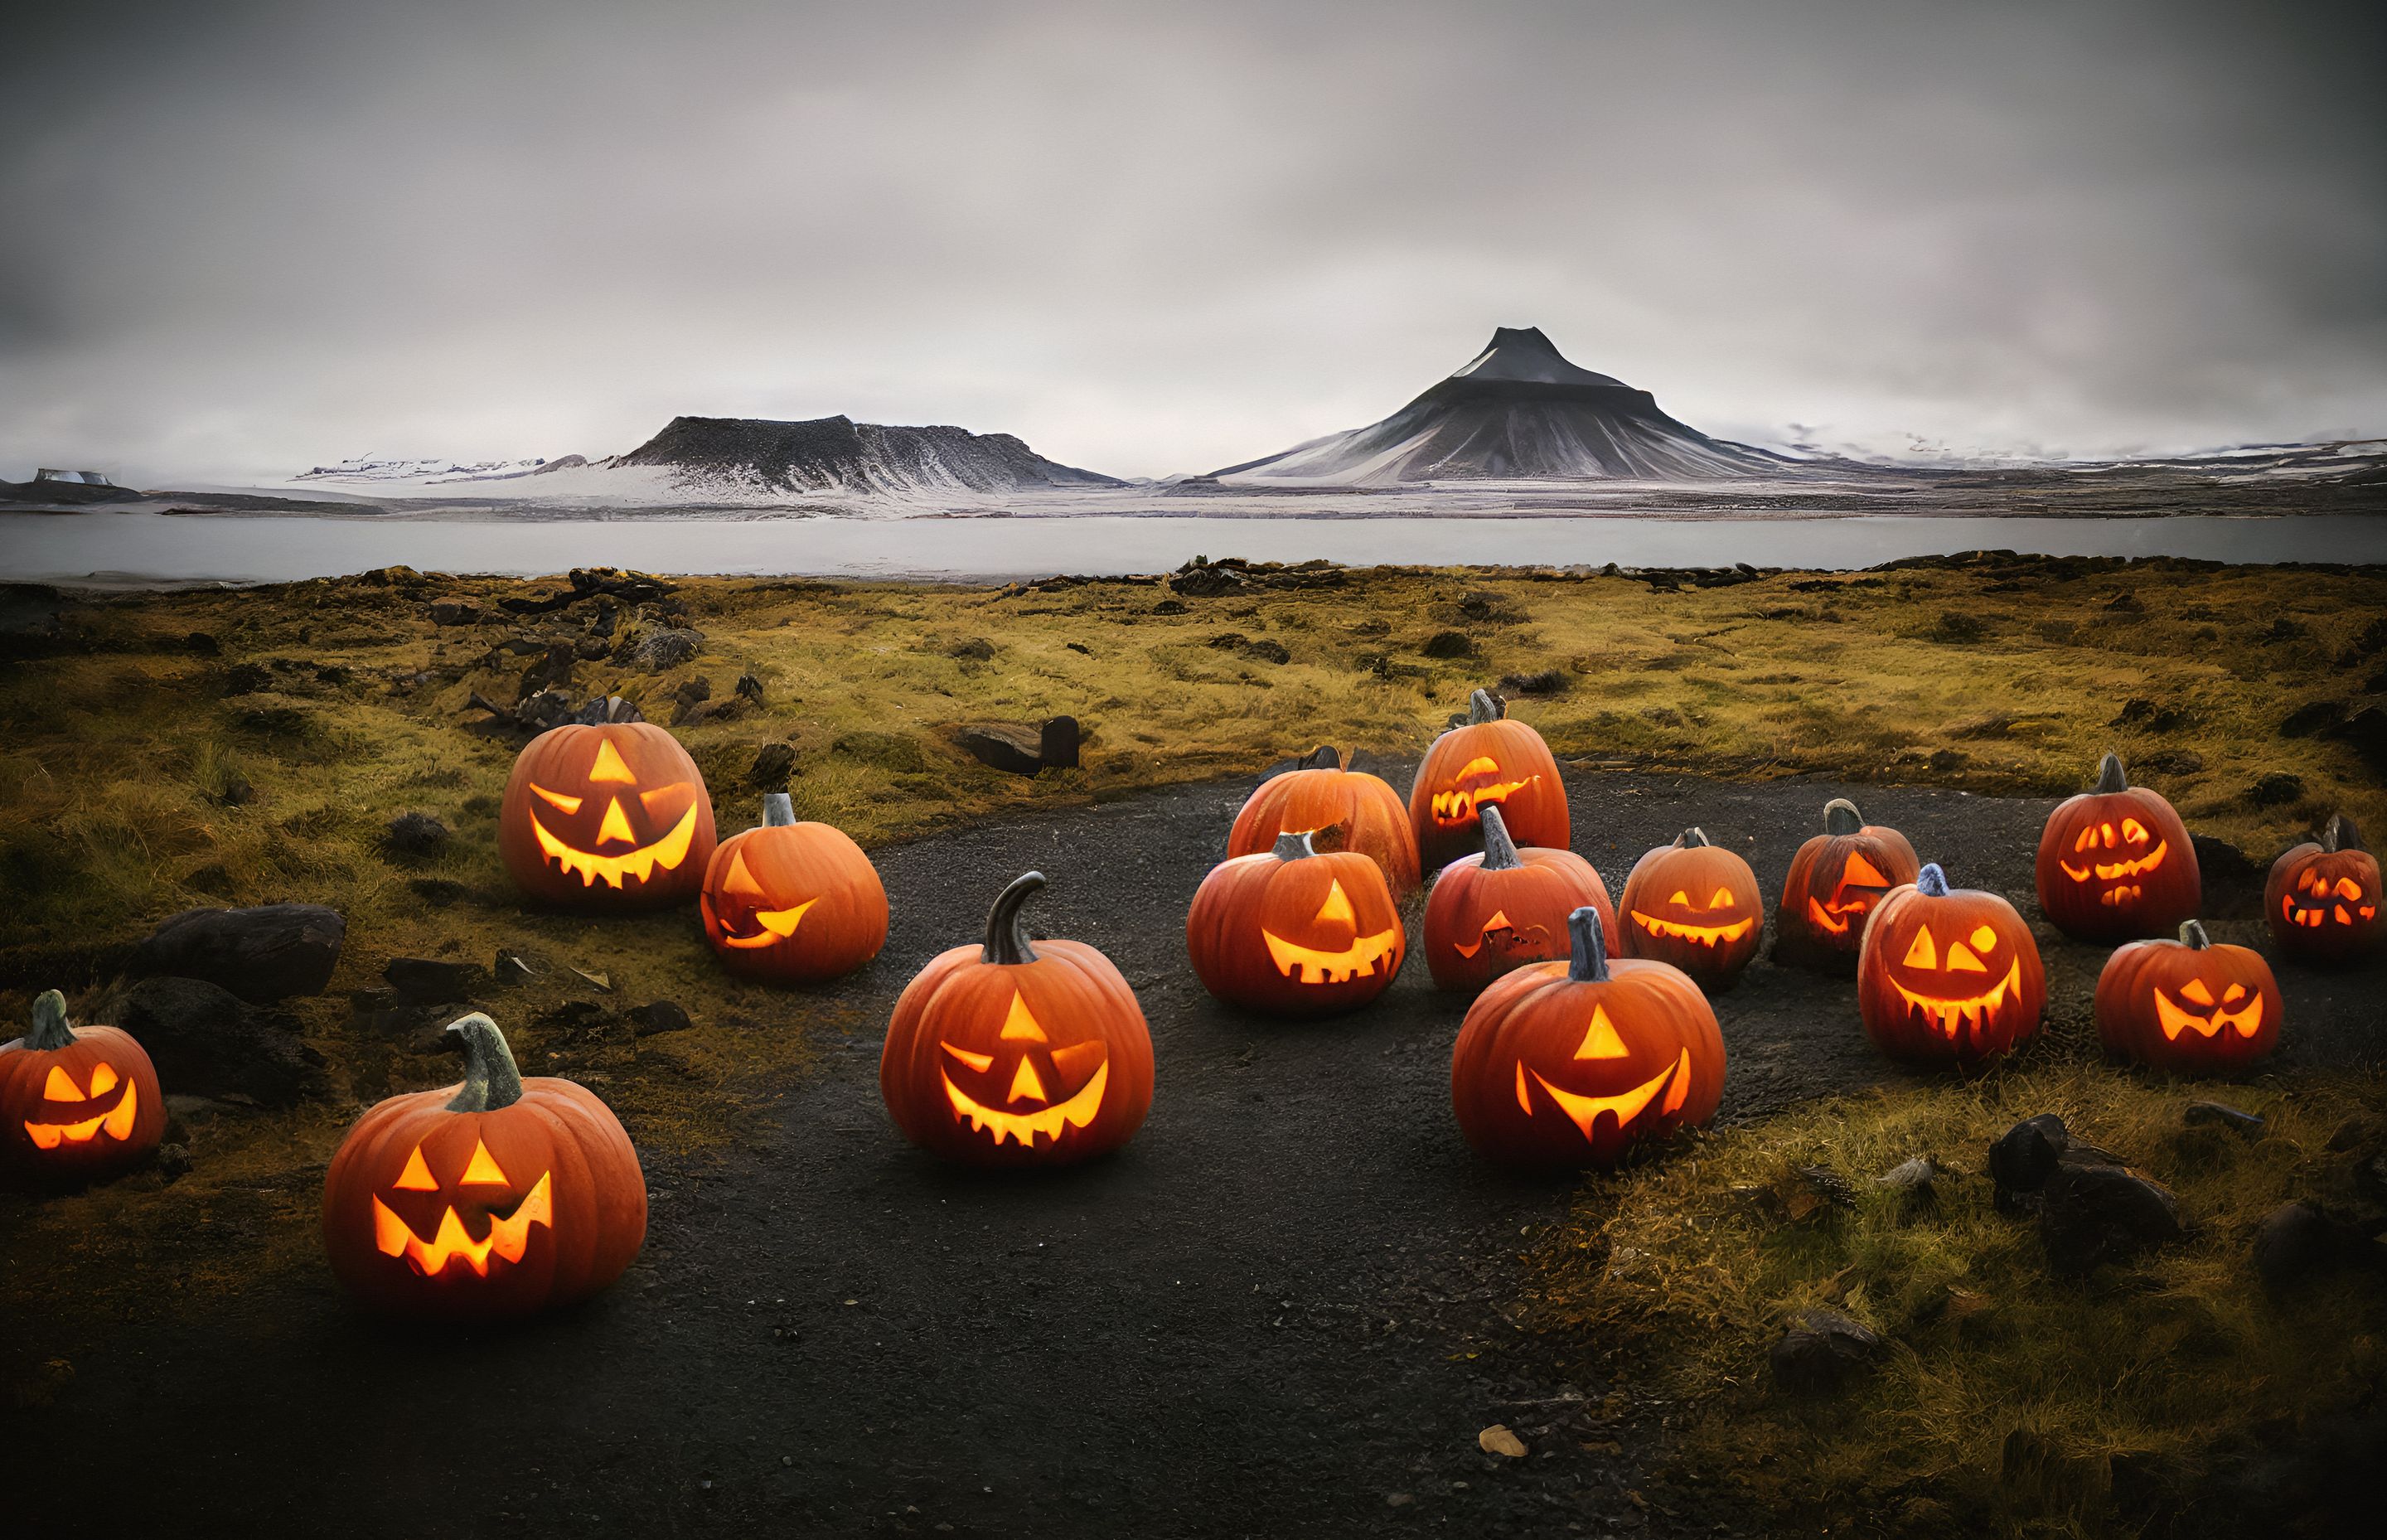 Halloween pumpkins sitting near mountains in Iceland